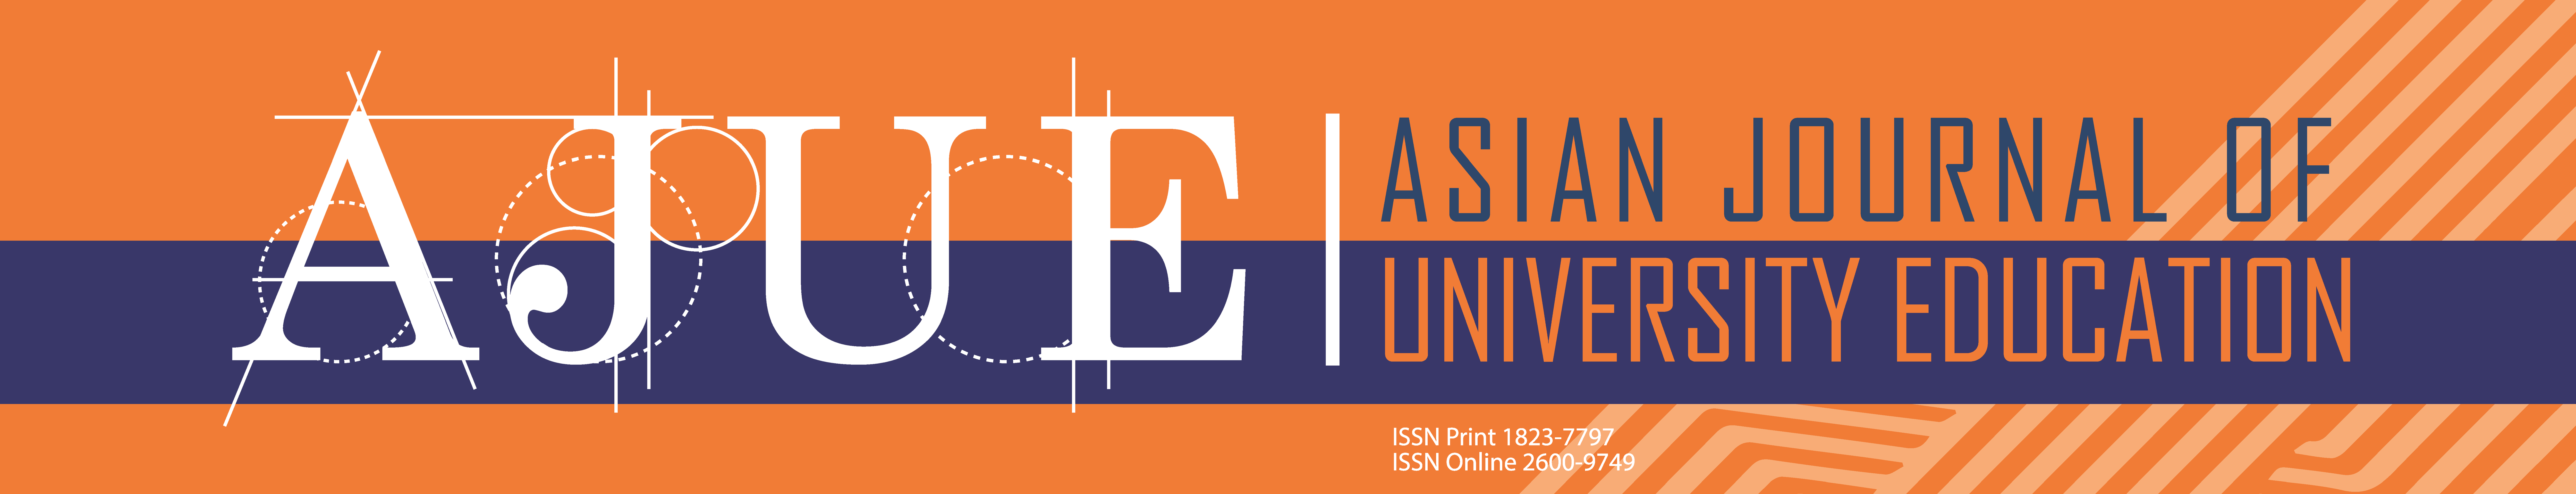 Asian Journal of University Education